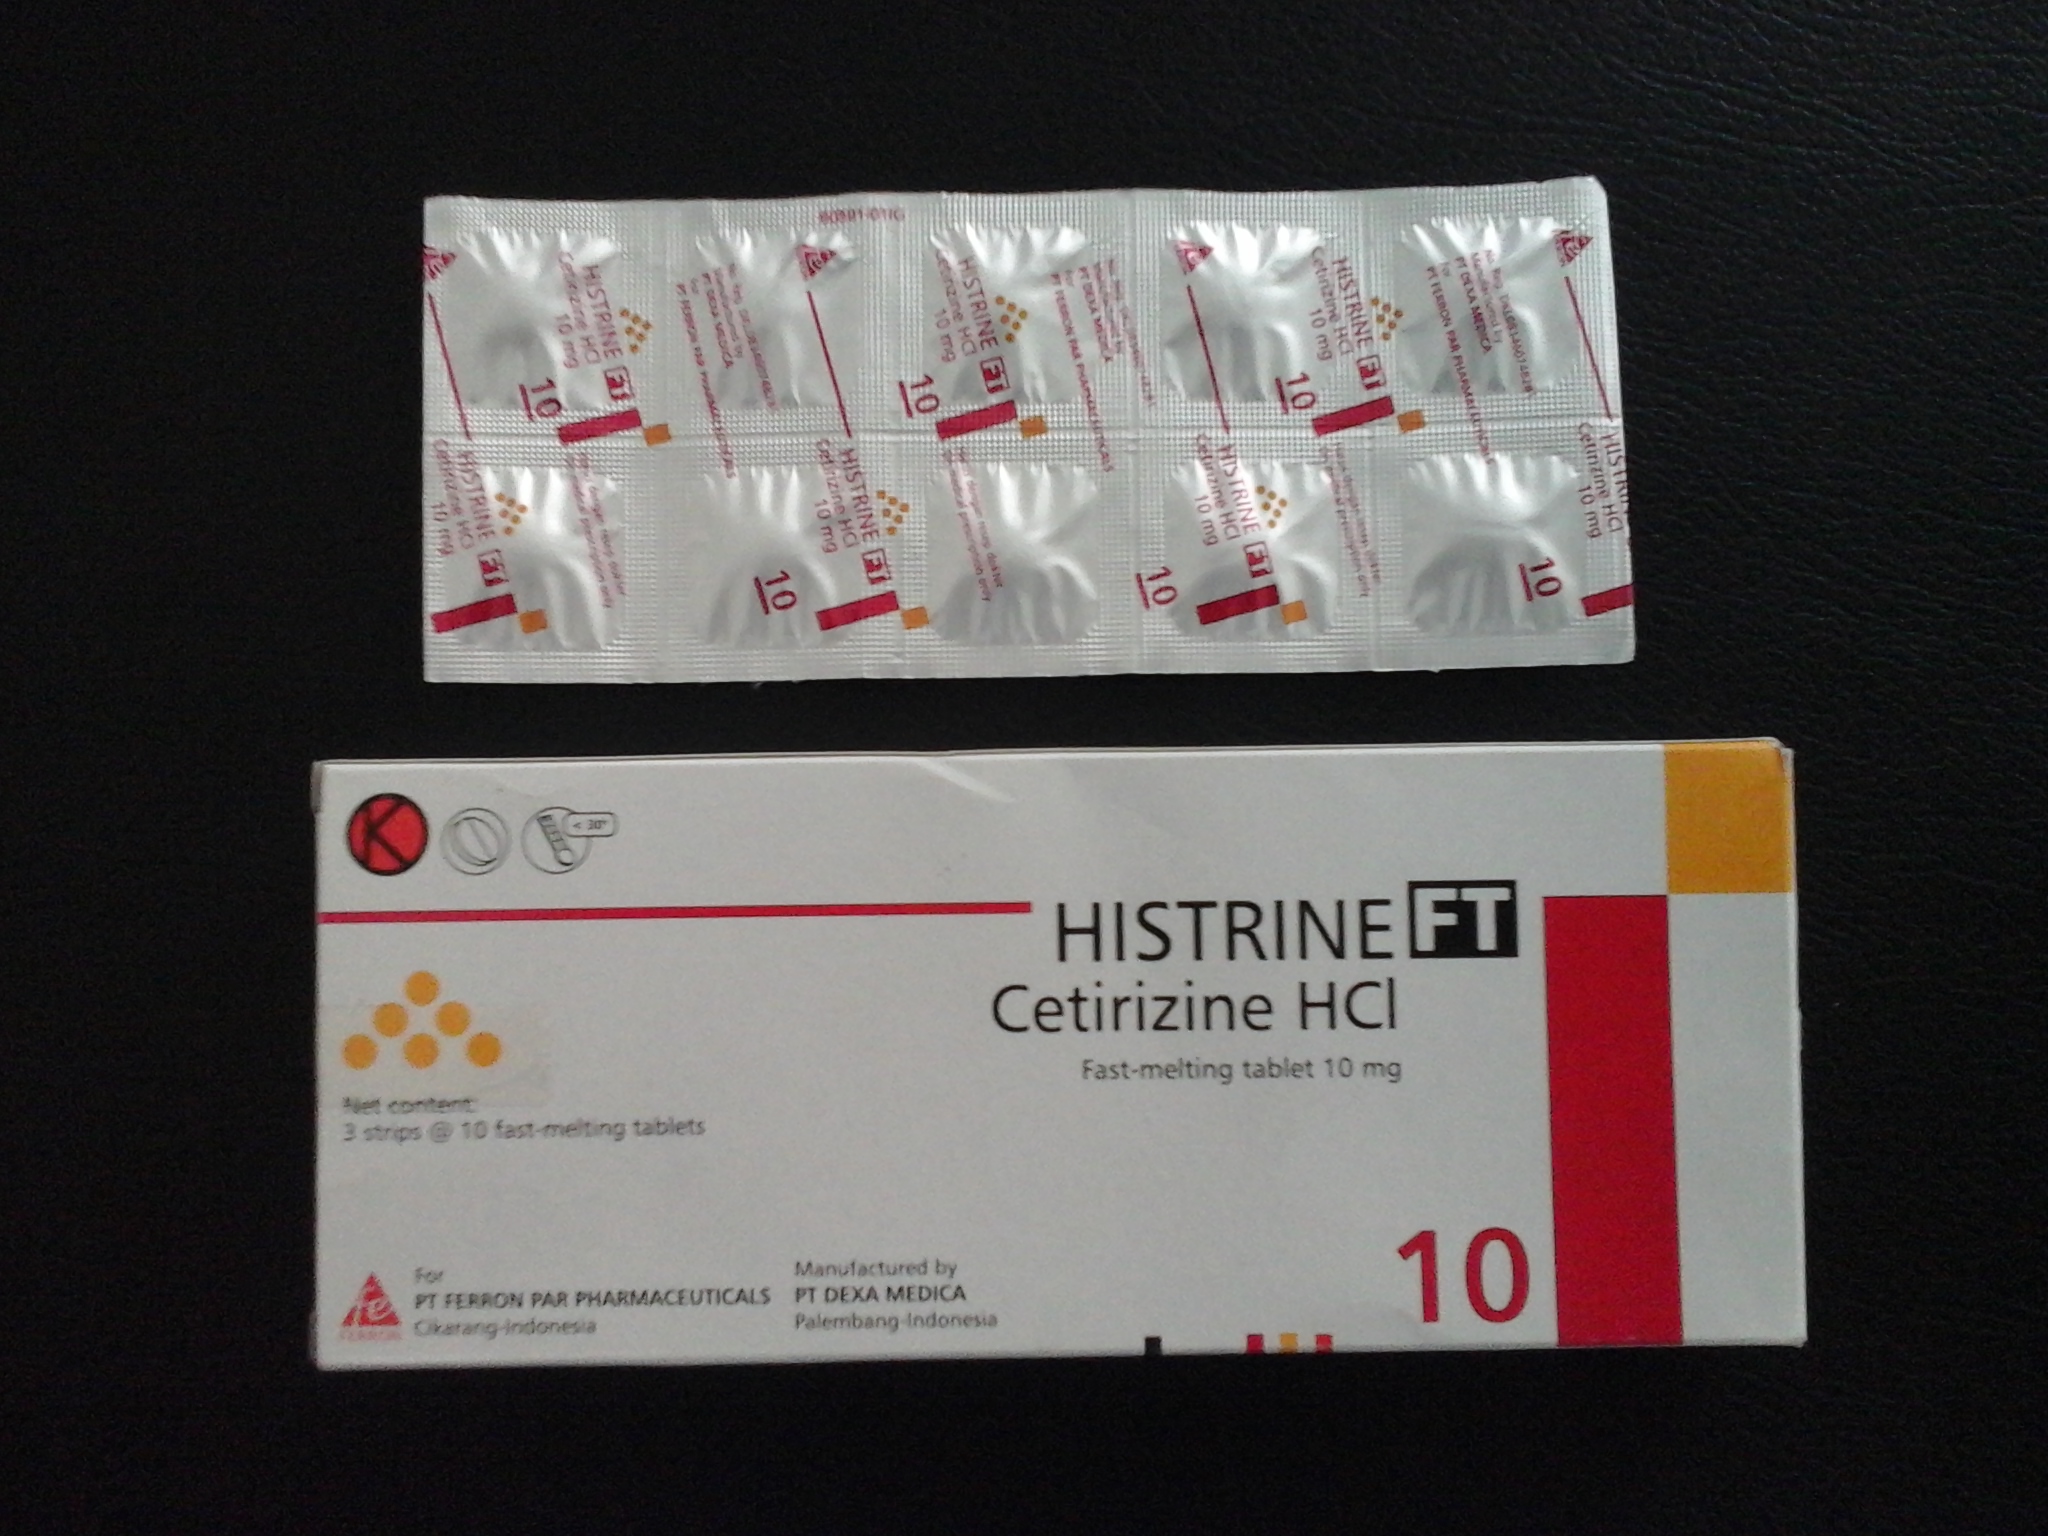 Histrine FT